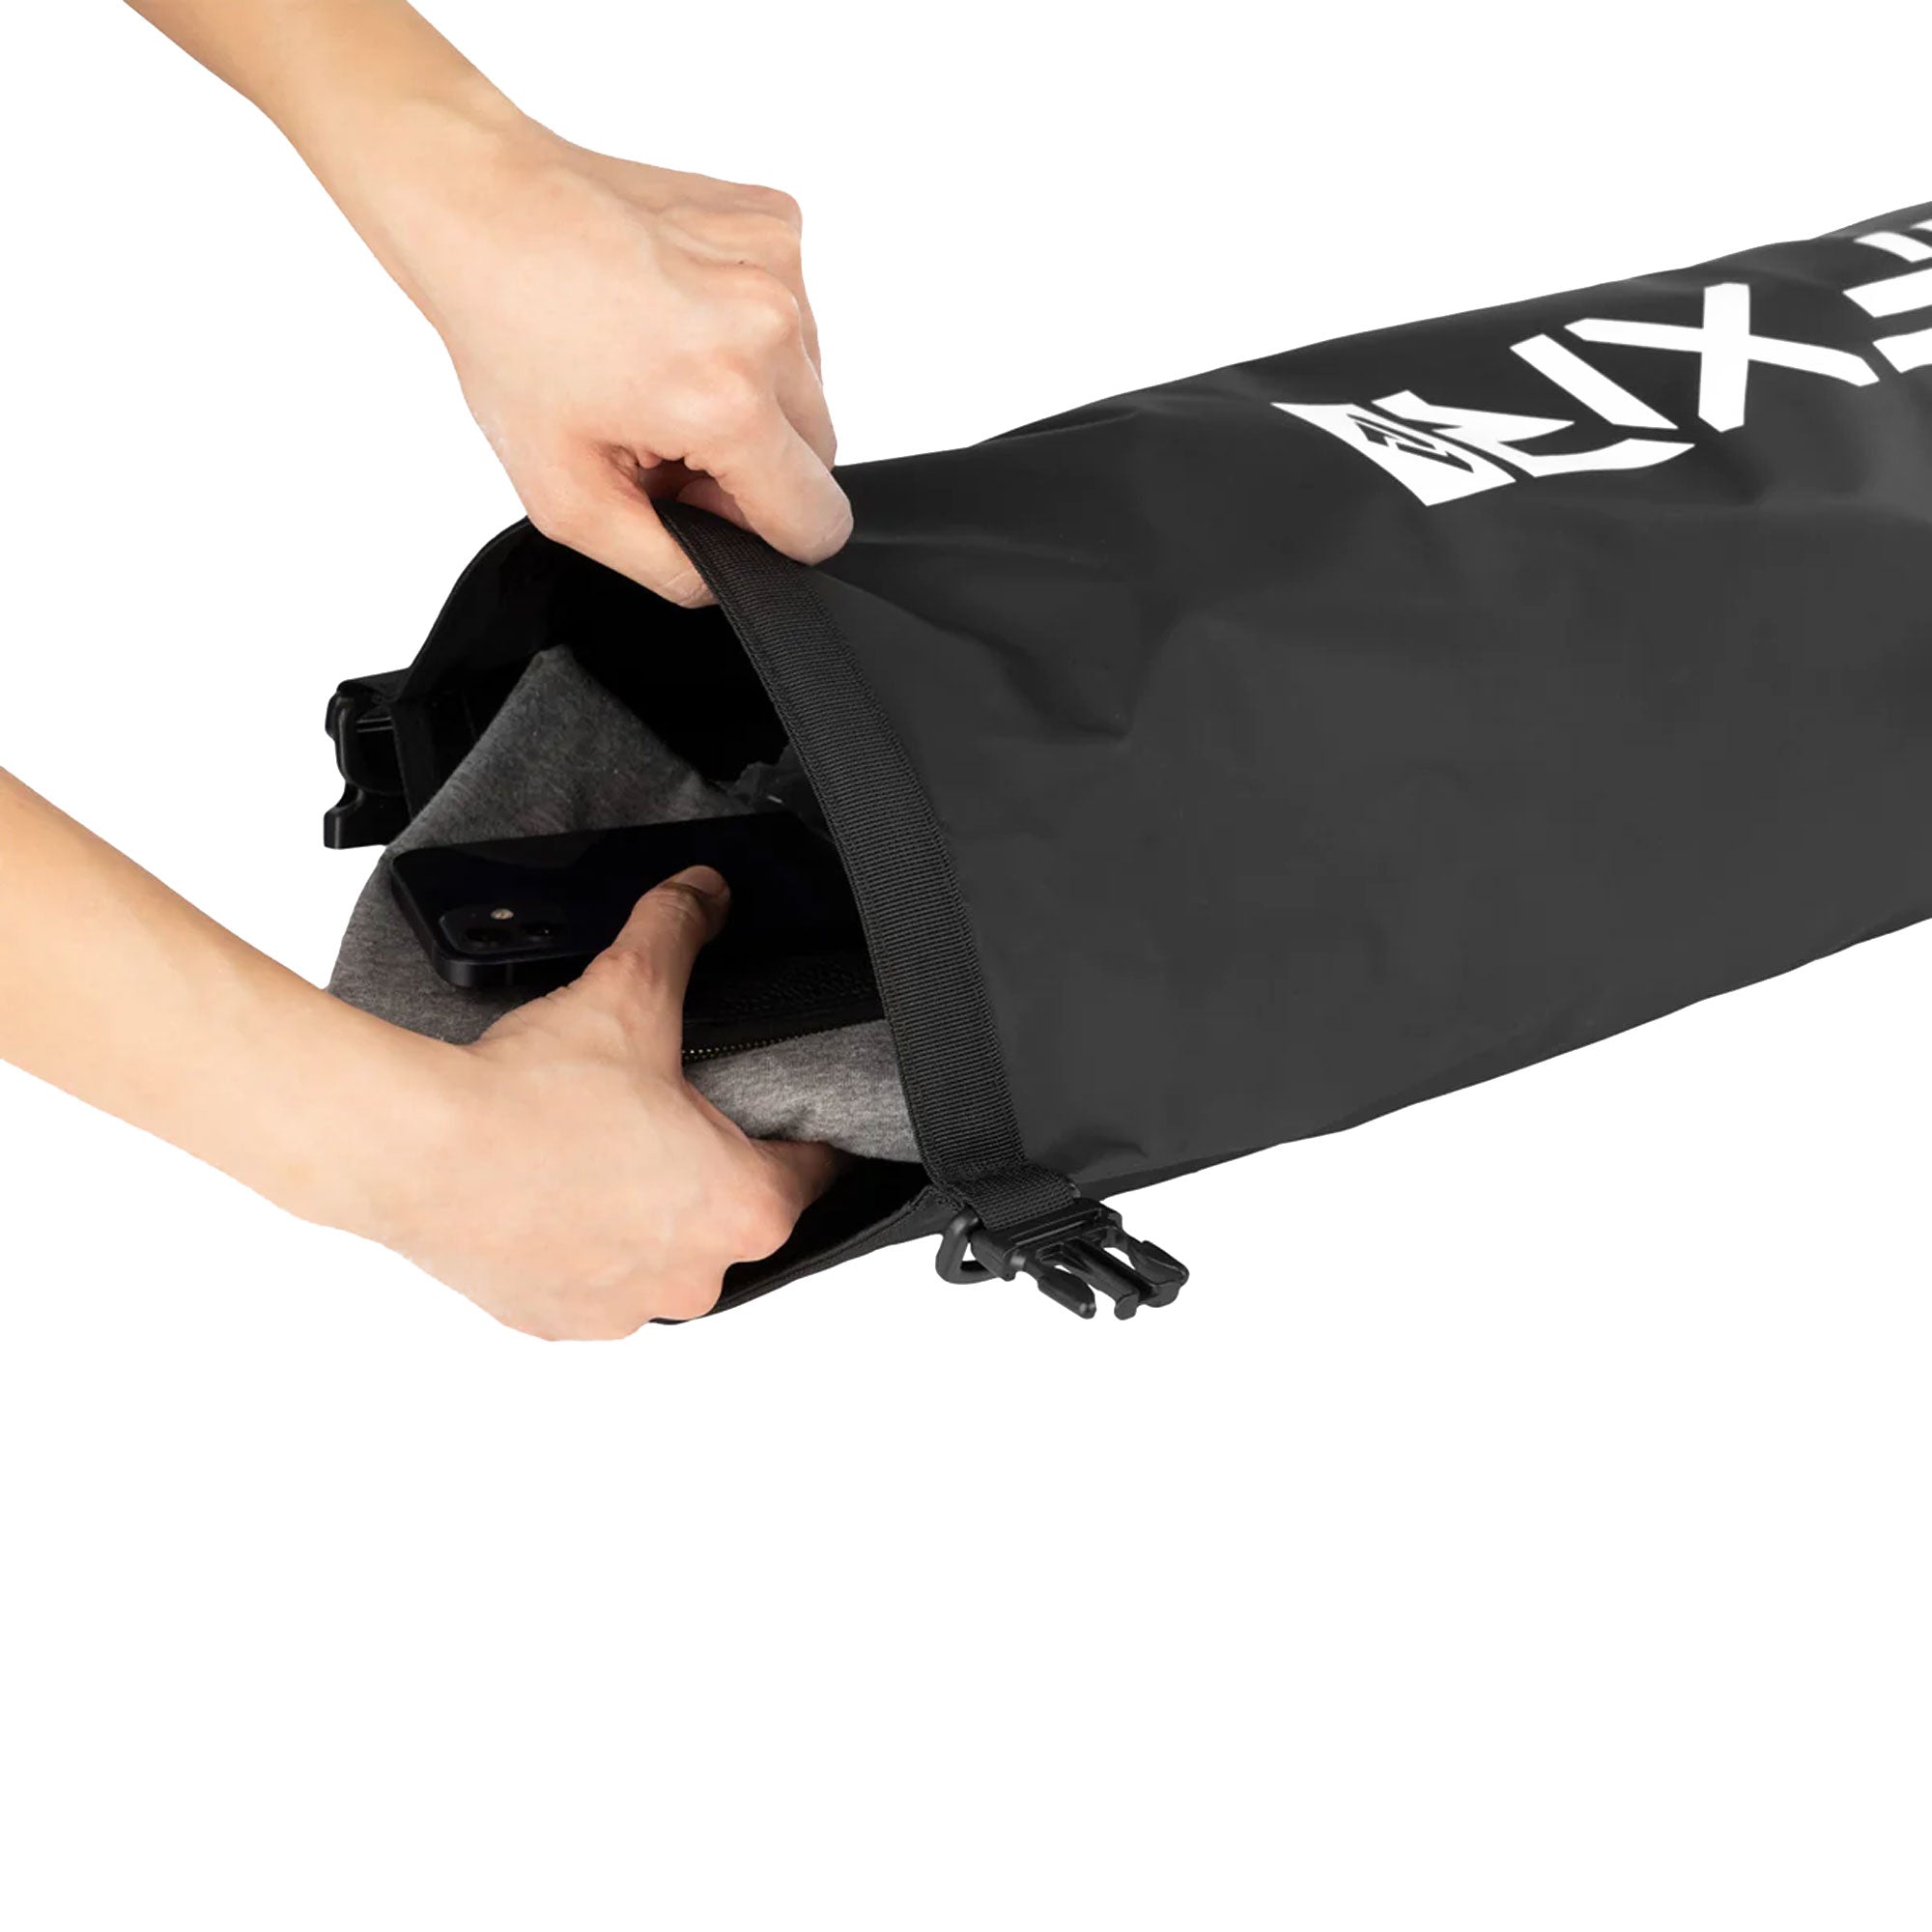 FXR Dry Bag